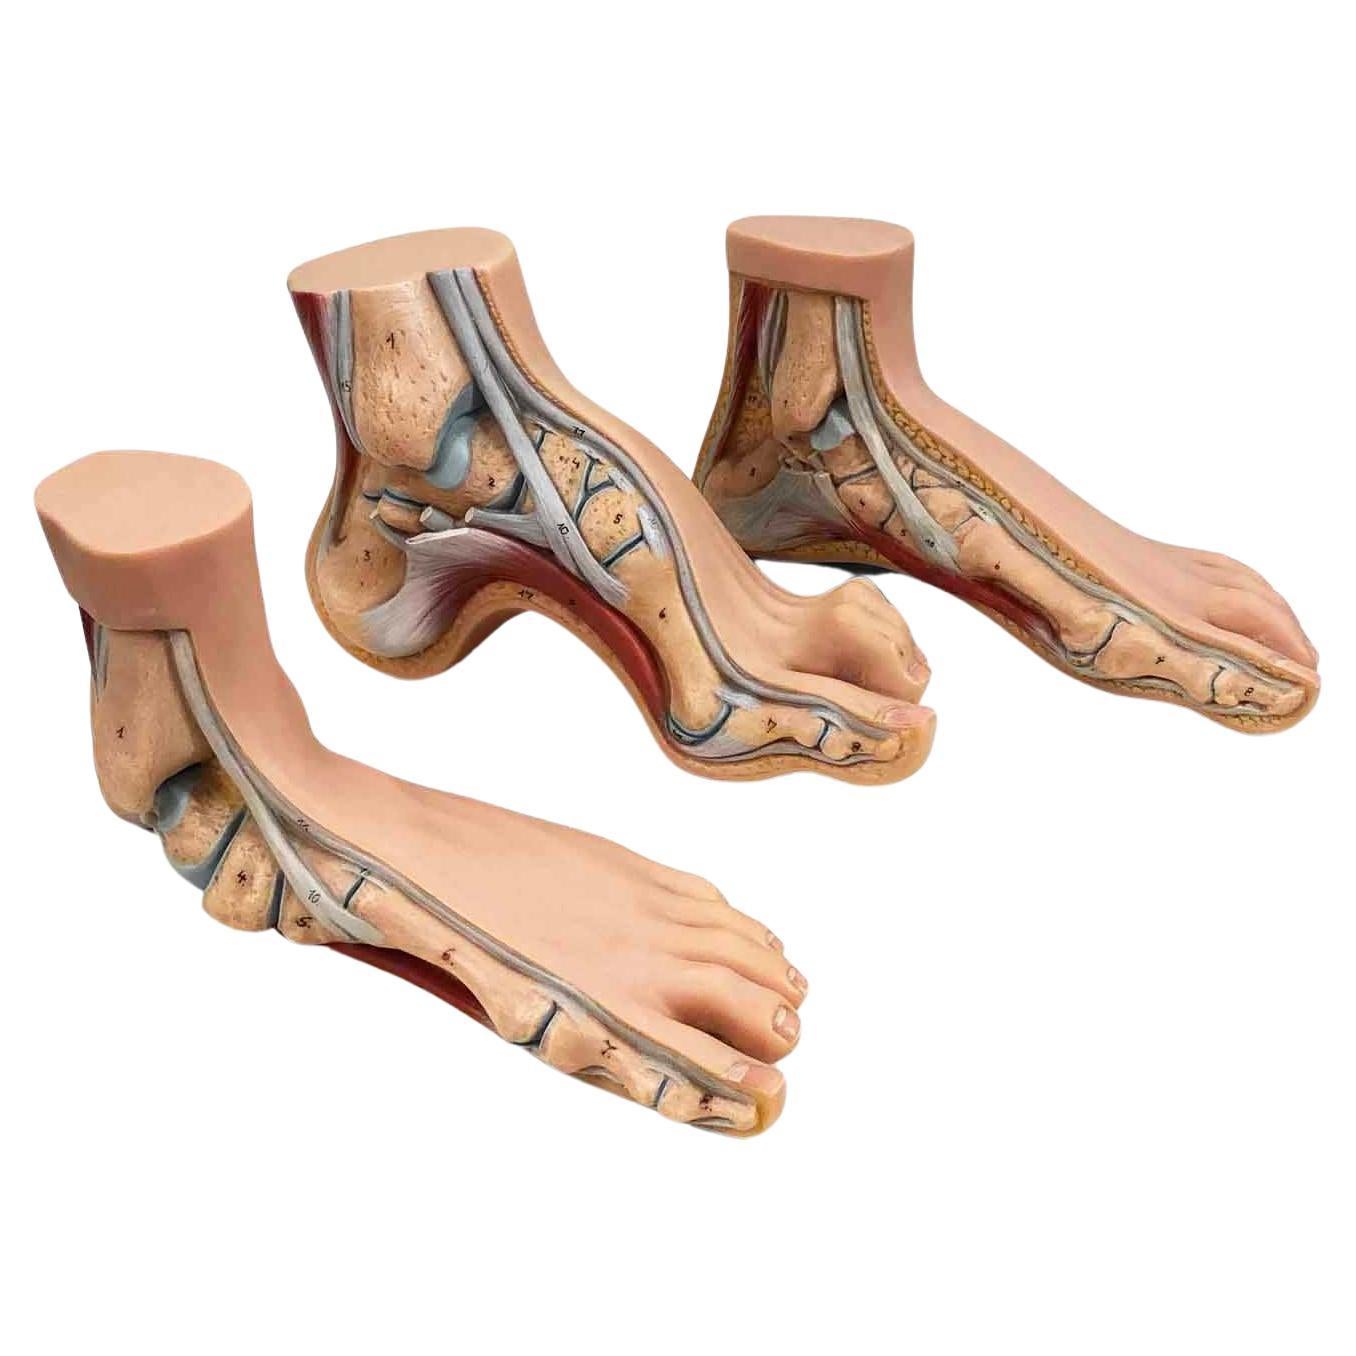 Vintage Anatomical Model of 3 Human Feet, Set of 3